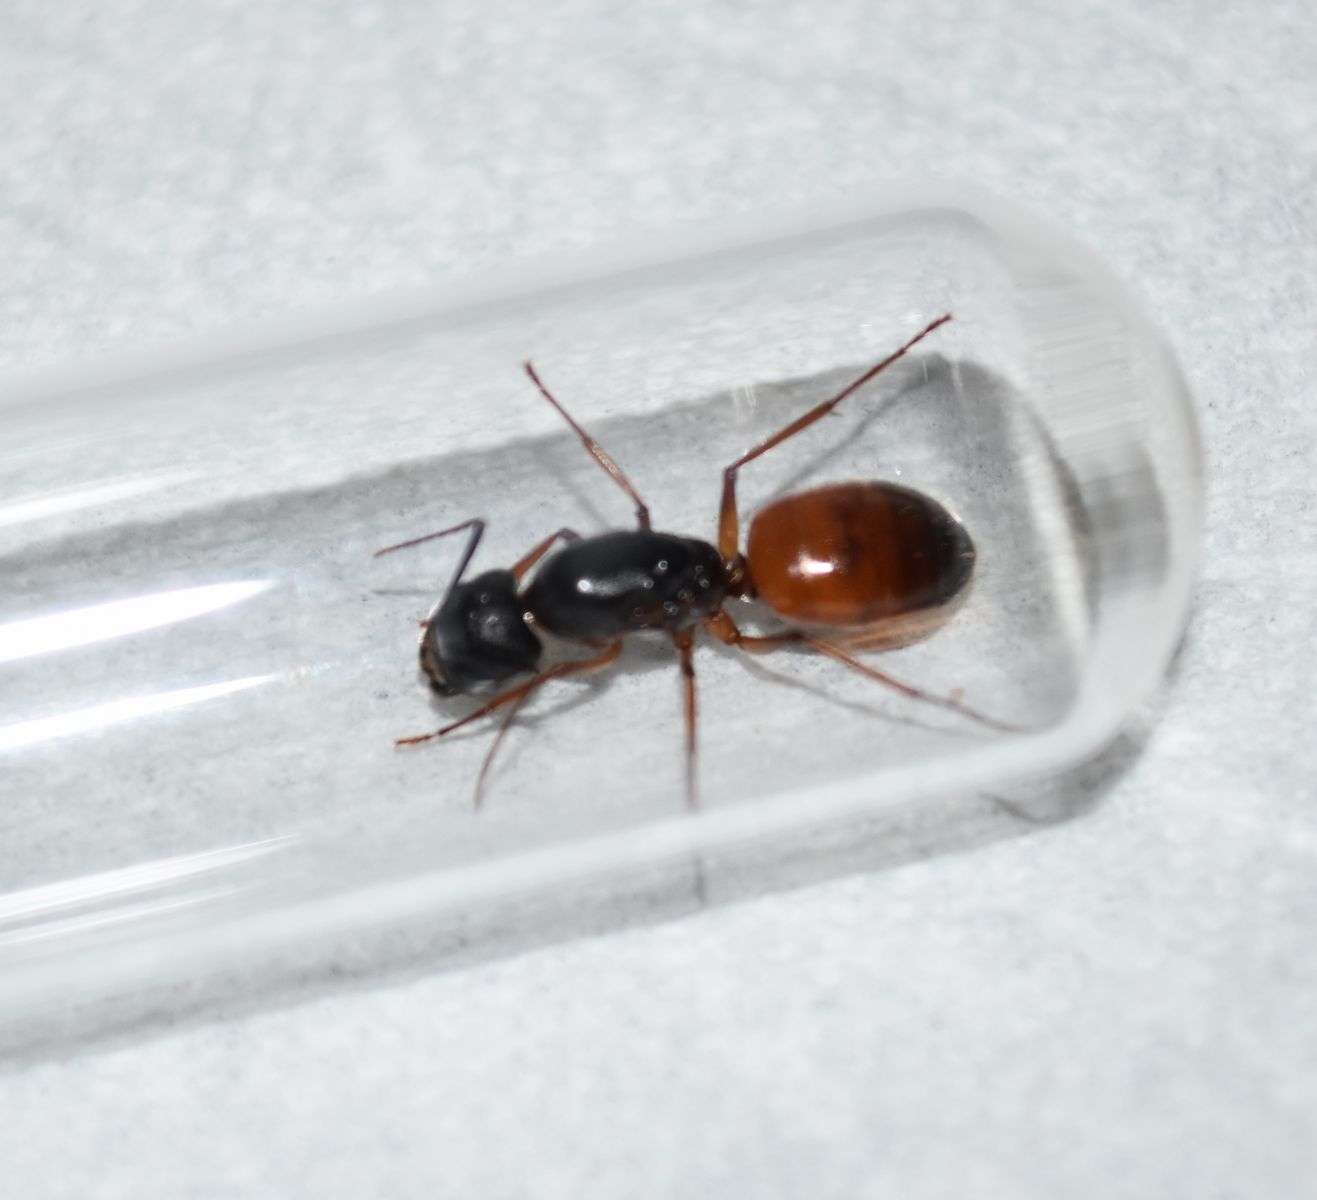 Camponotus Sansabeanus Queen found on 3/30/18 on Chaney Trail